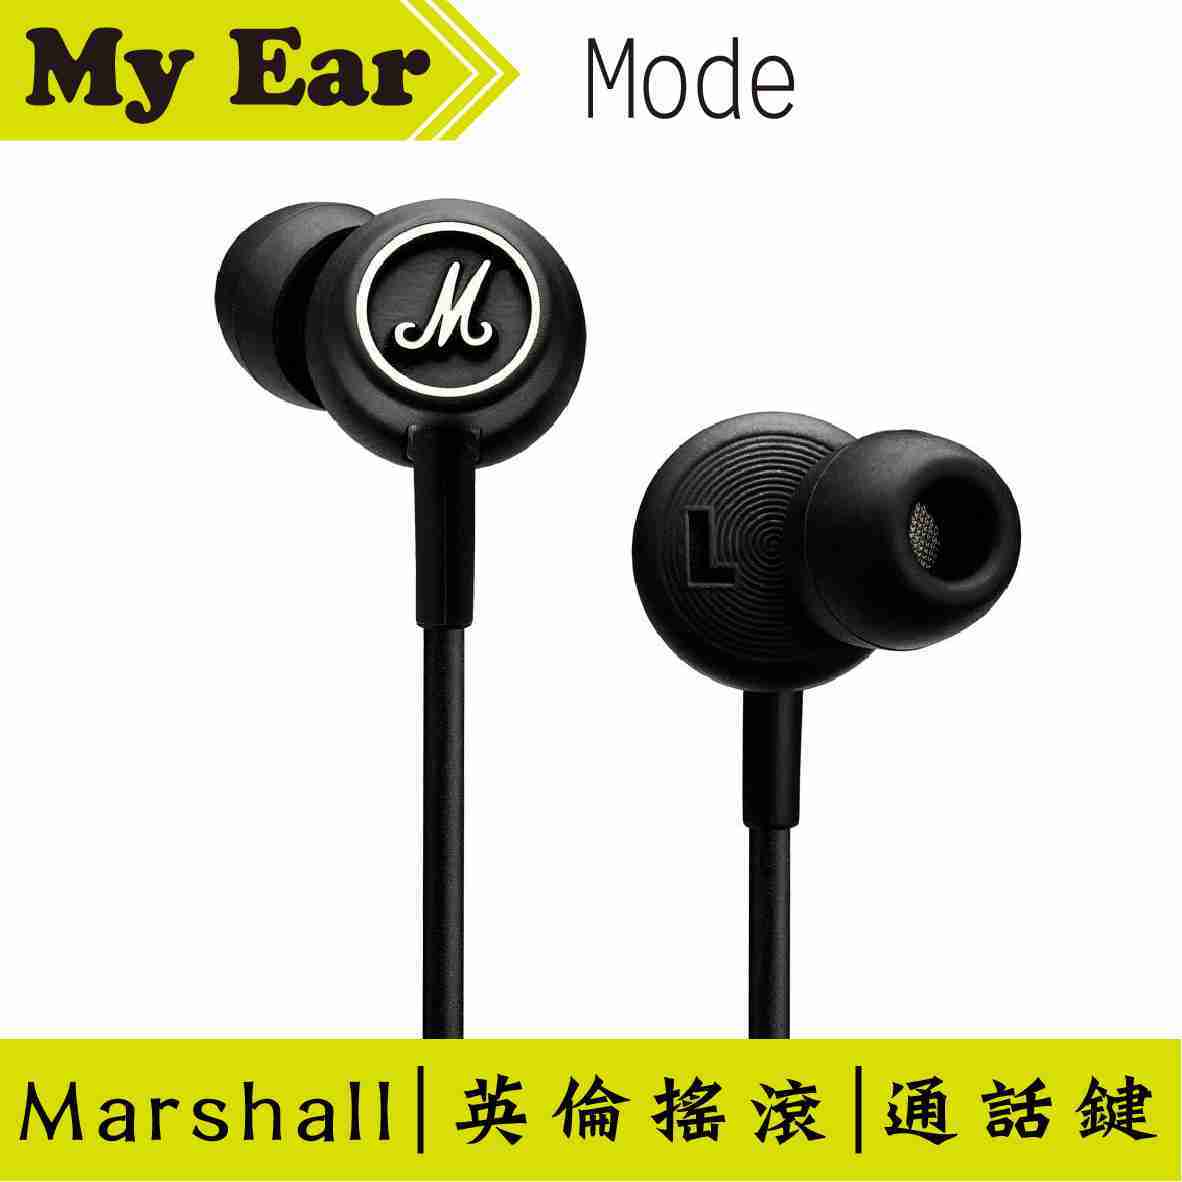 Marshall Mode 入耳式 耳機 麥克風功能 | My Ear耳機專門店